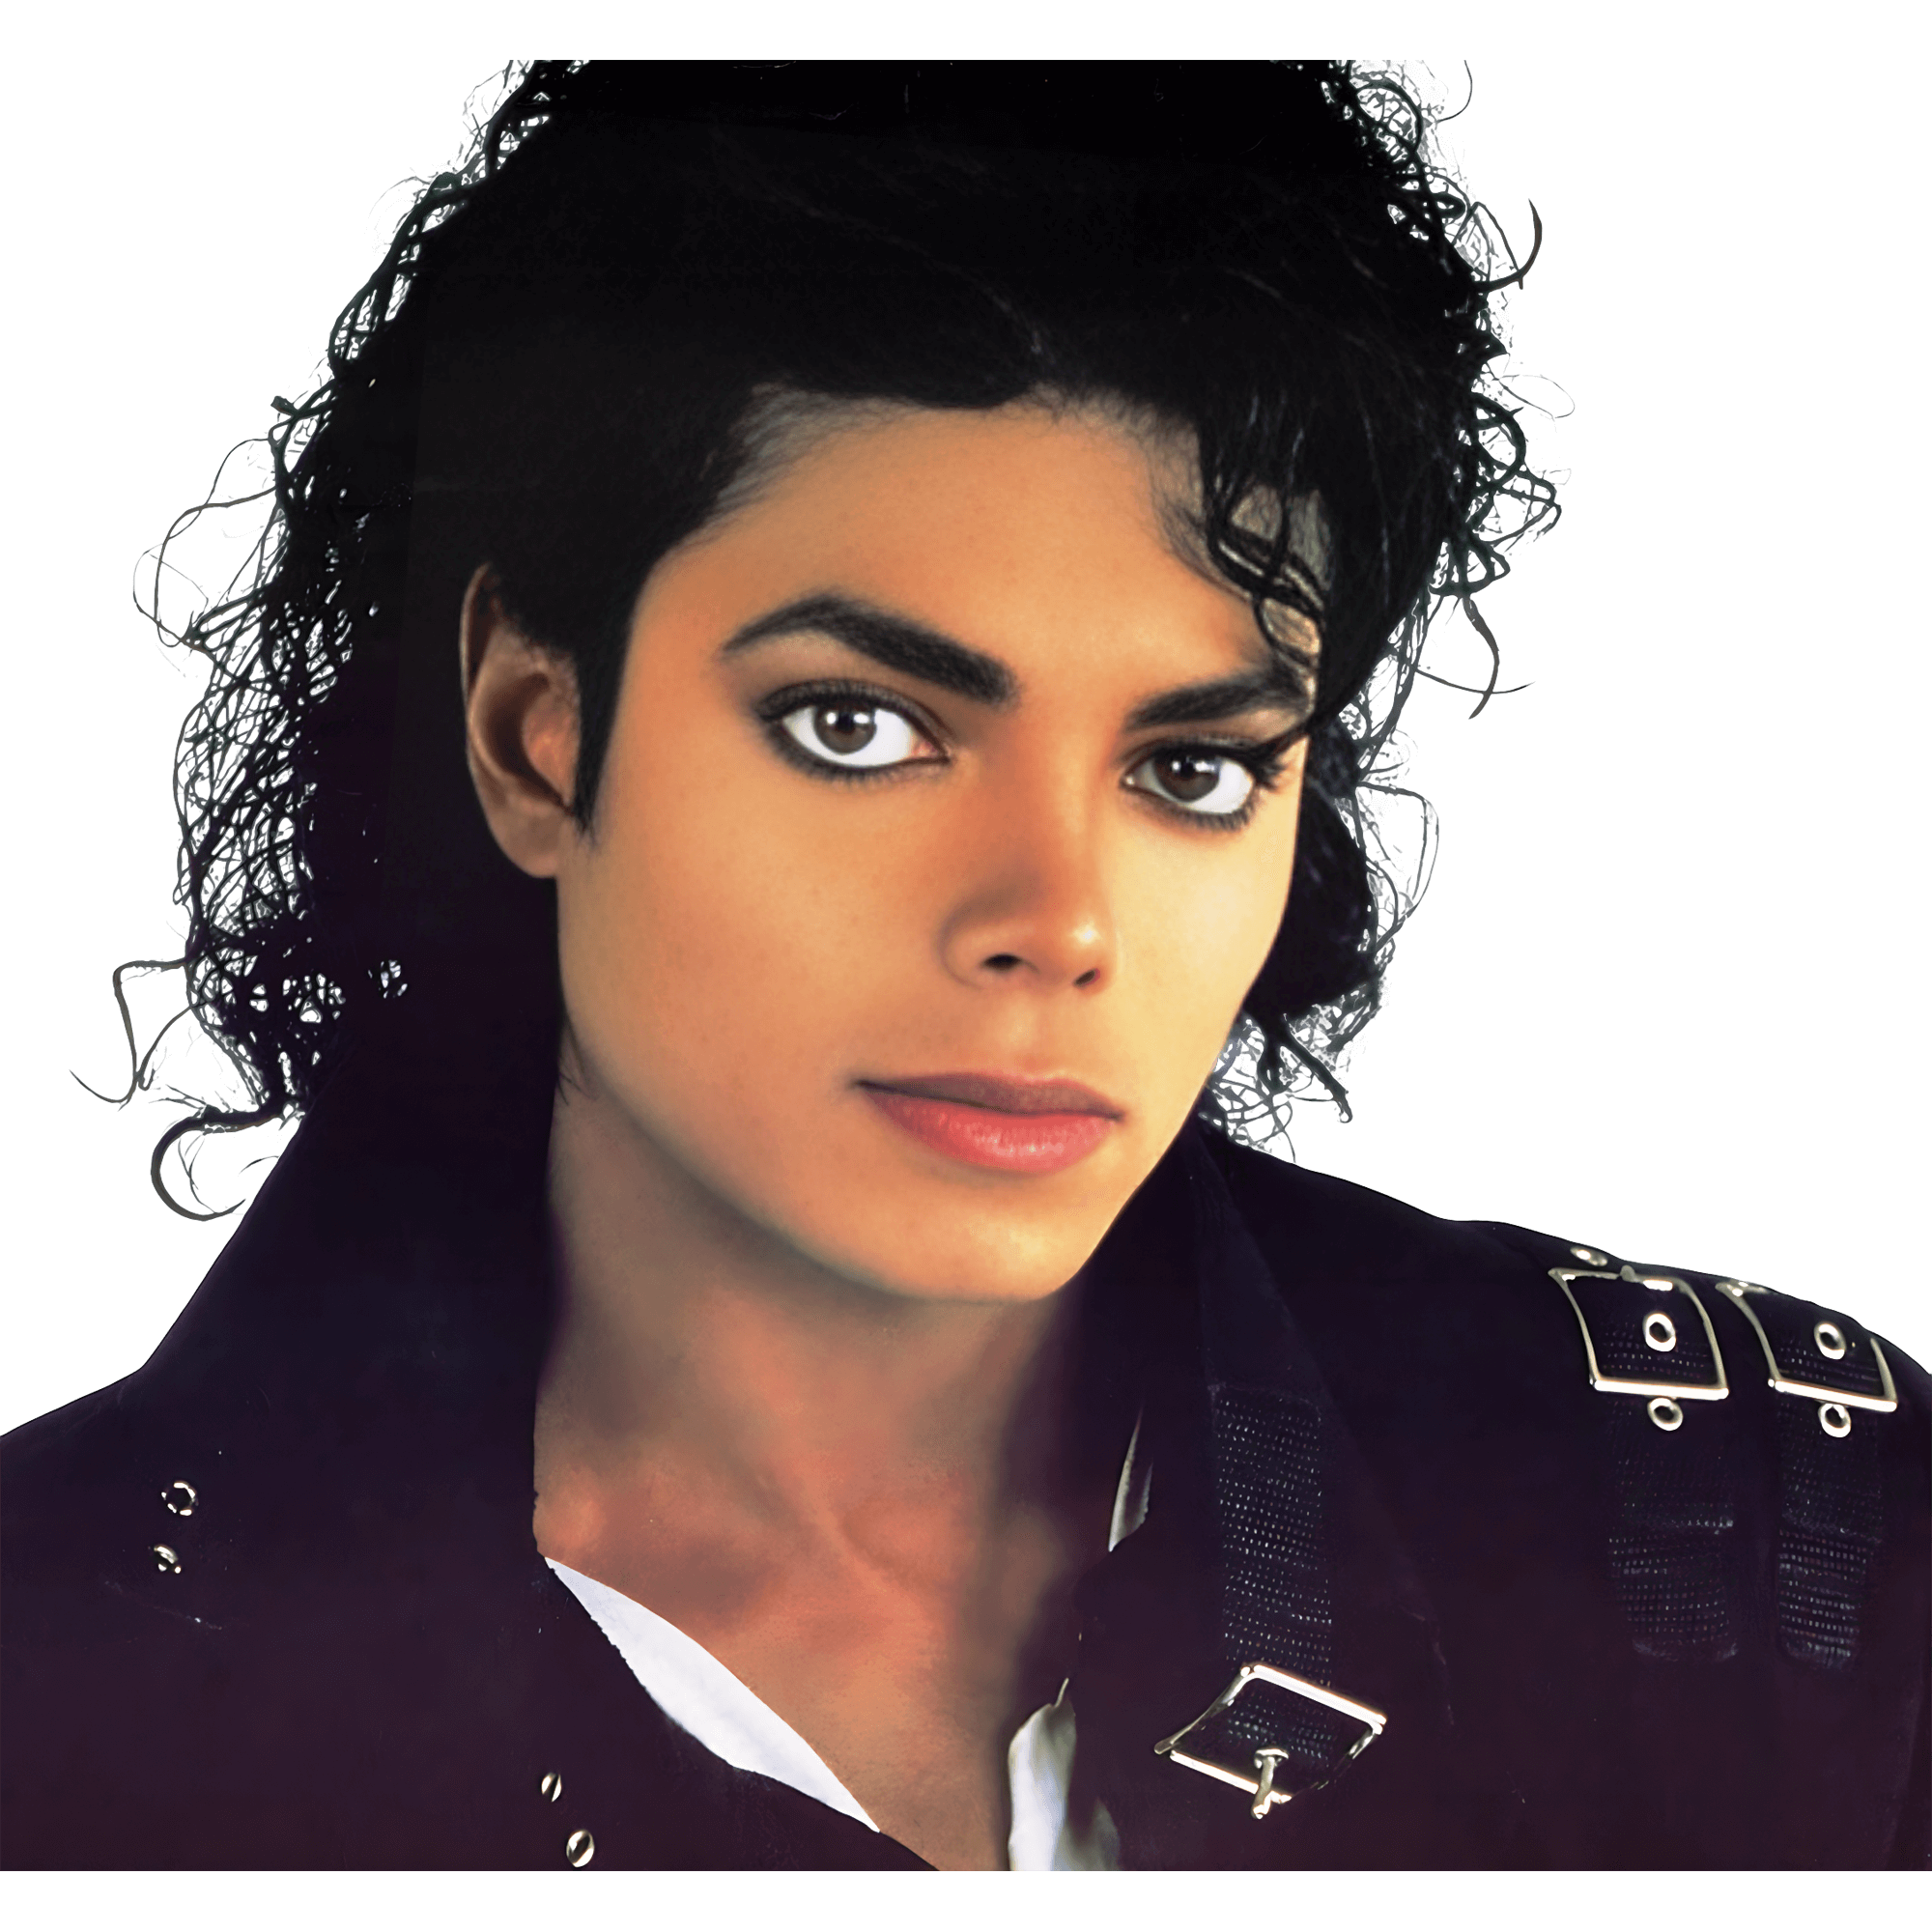 Michael Jackson Transparent Gallery